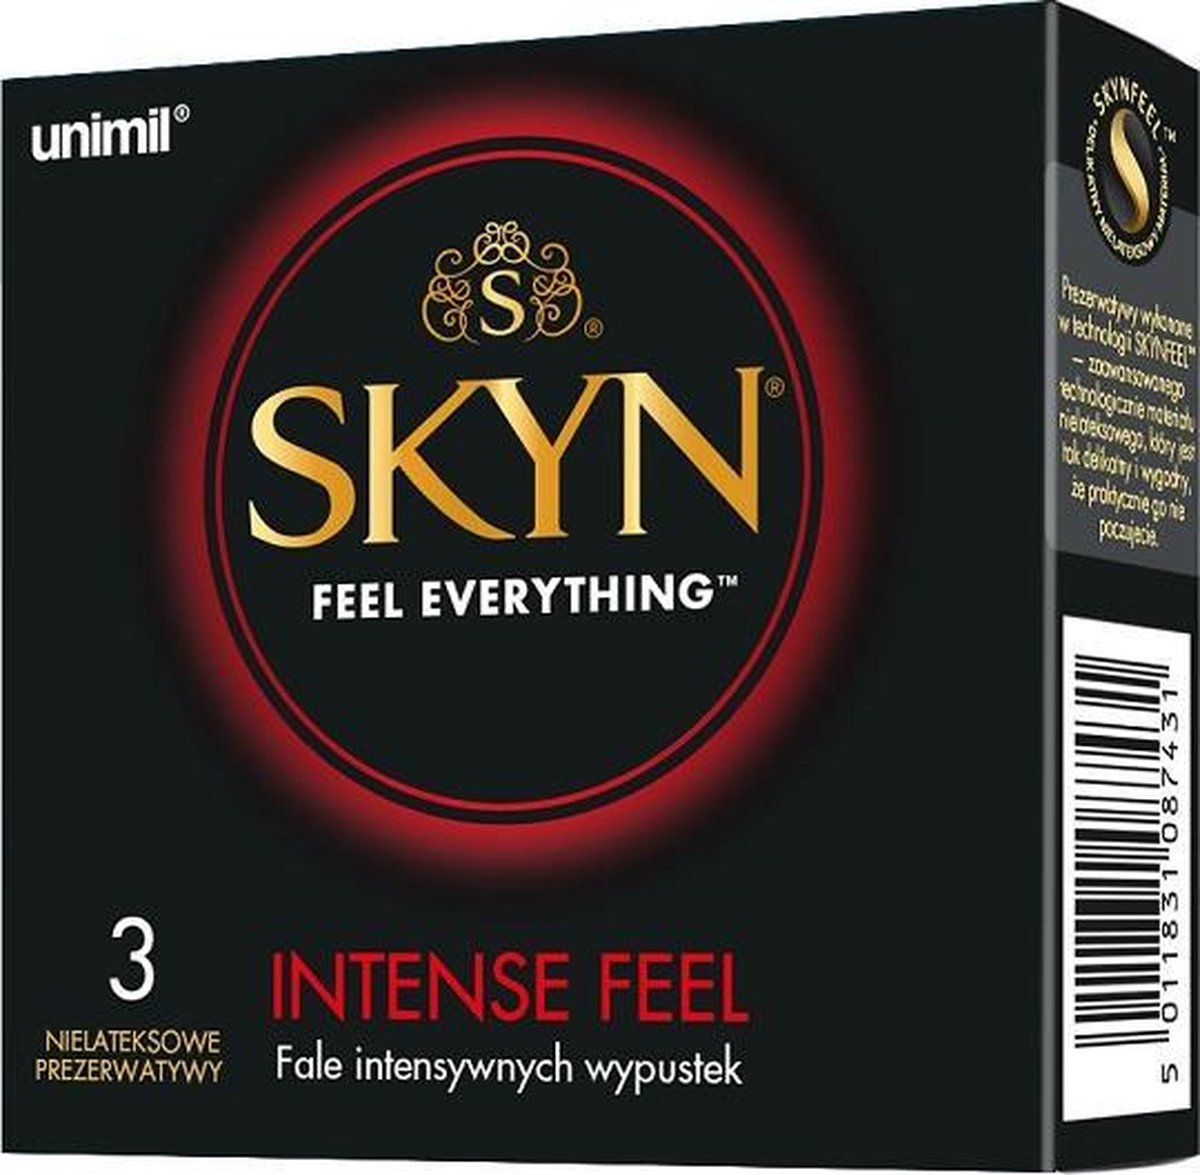 Unimil - Skyn Feel Everything Intense Feel nielateksowe prezerwatywy 3szt